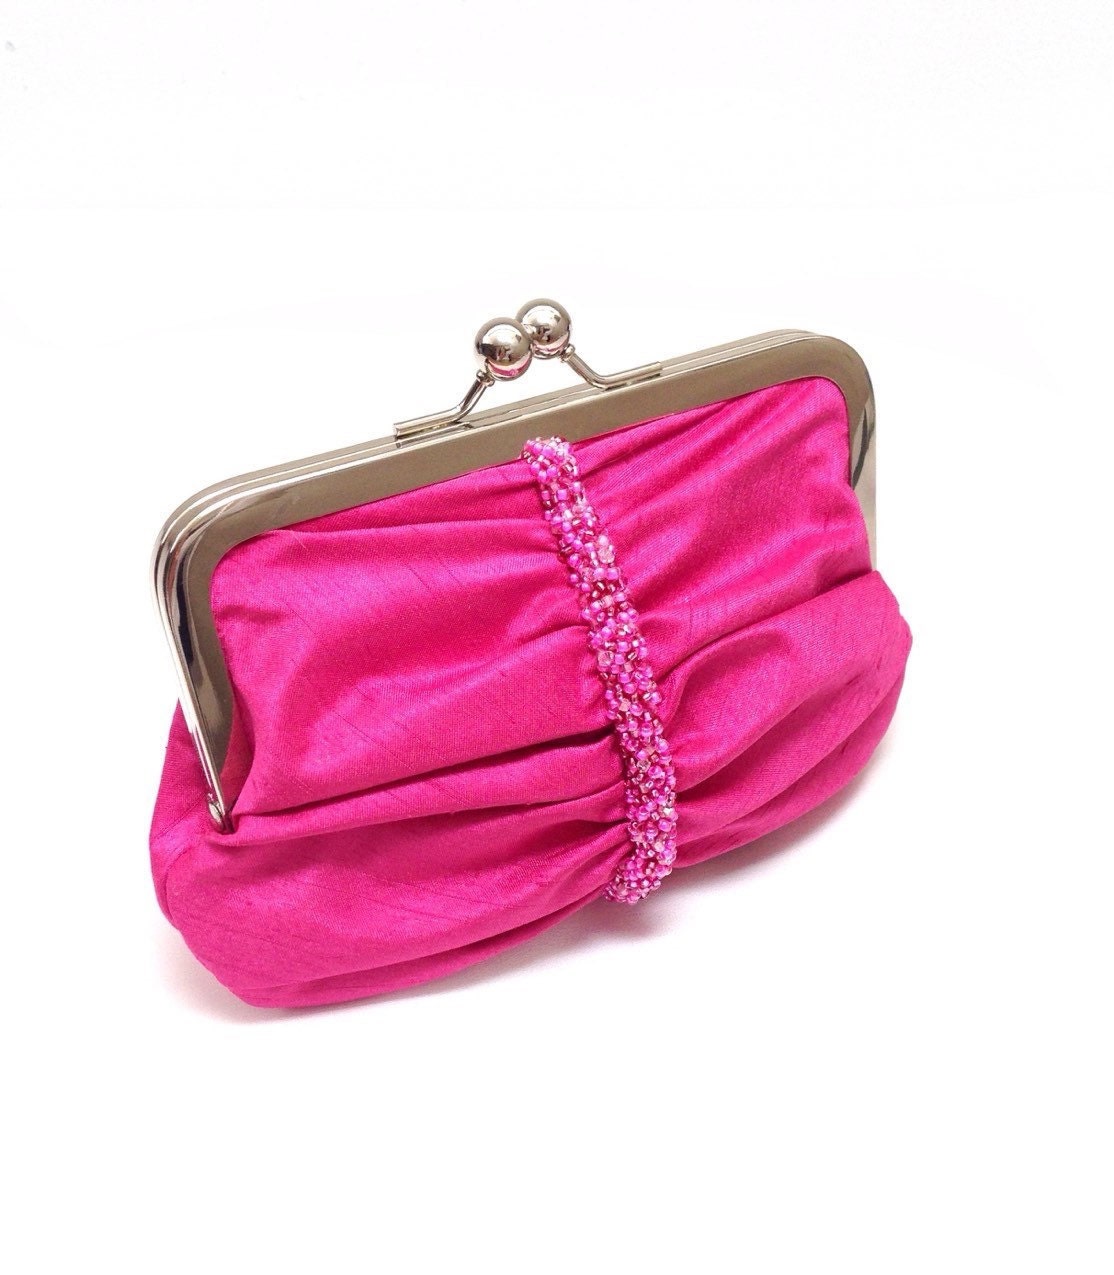 Hot pink Swarovski beaded clutch bag for wedding/prom or